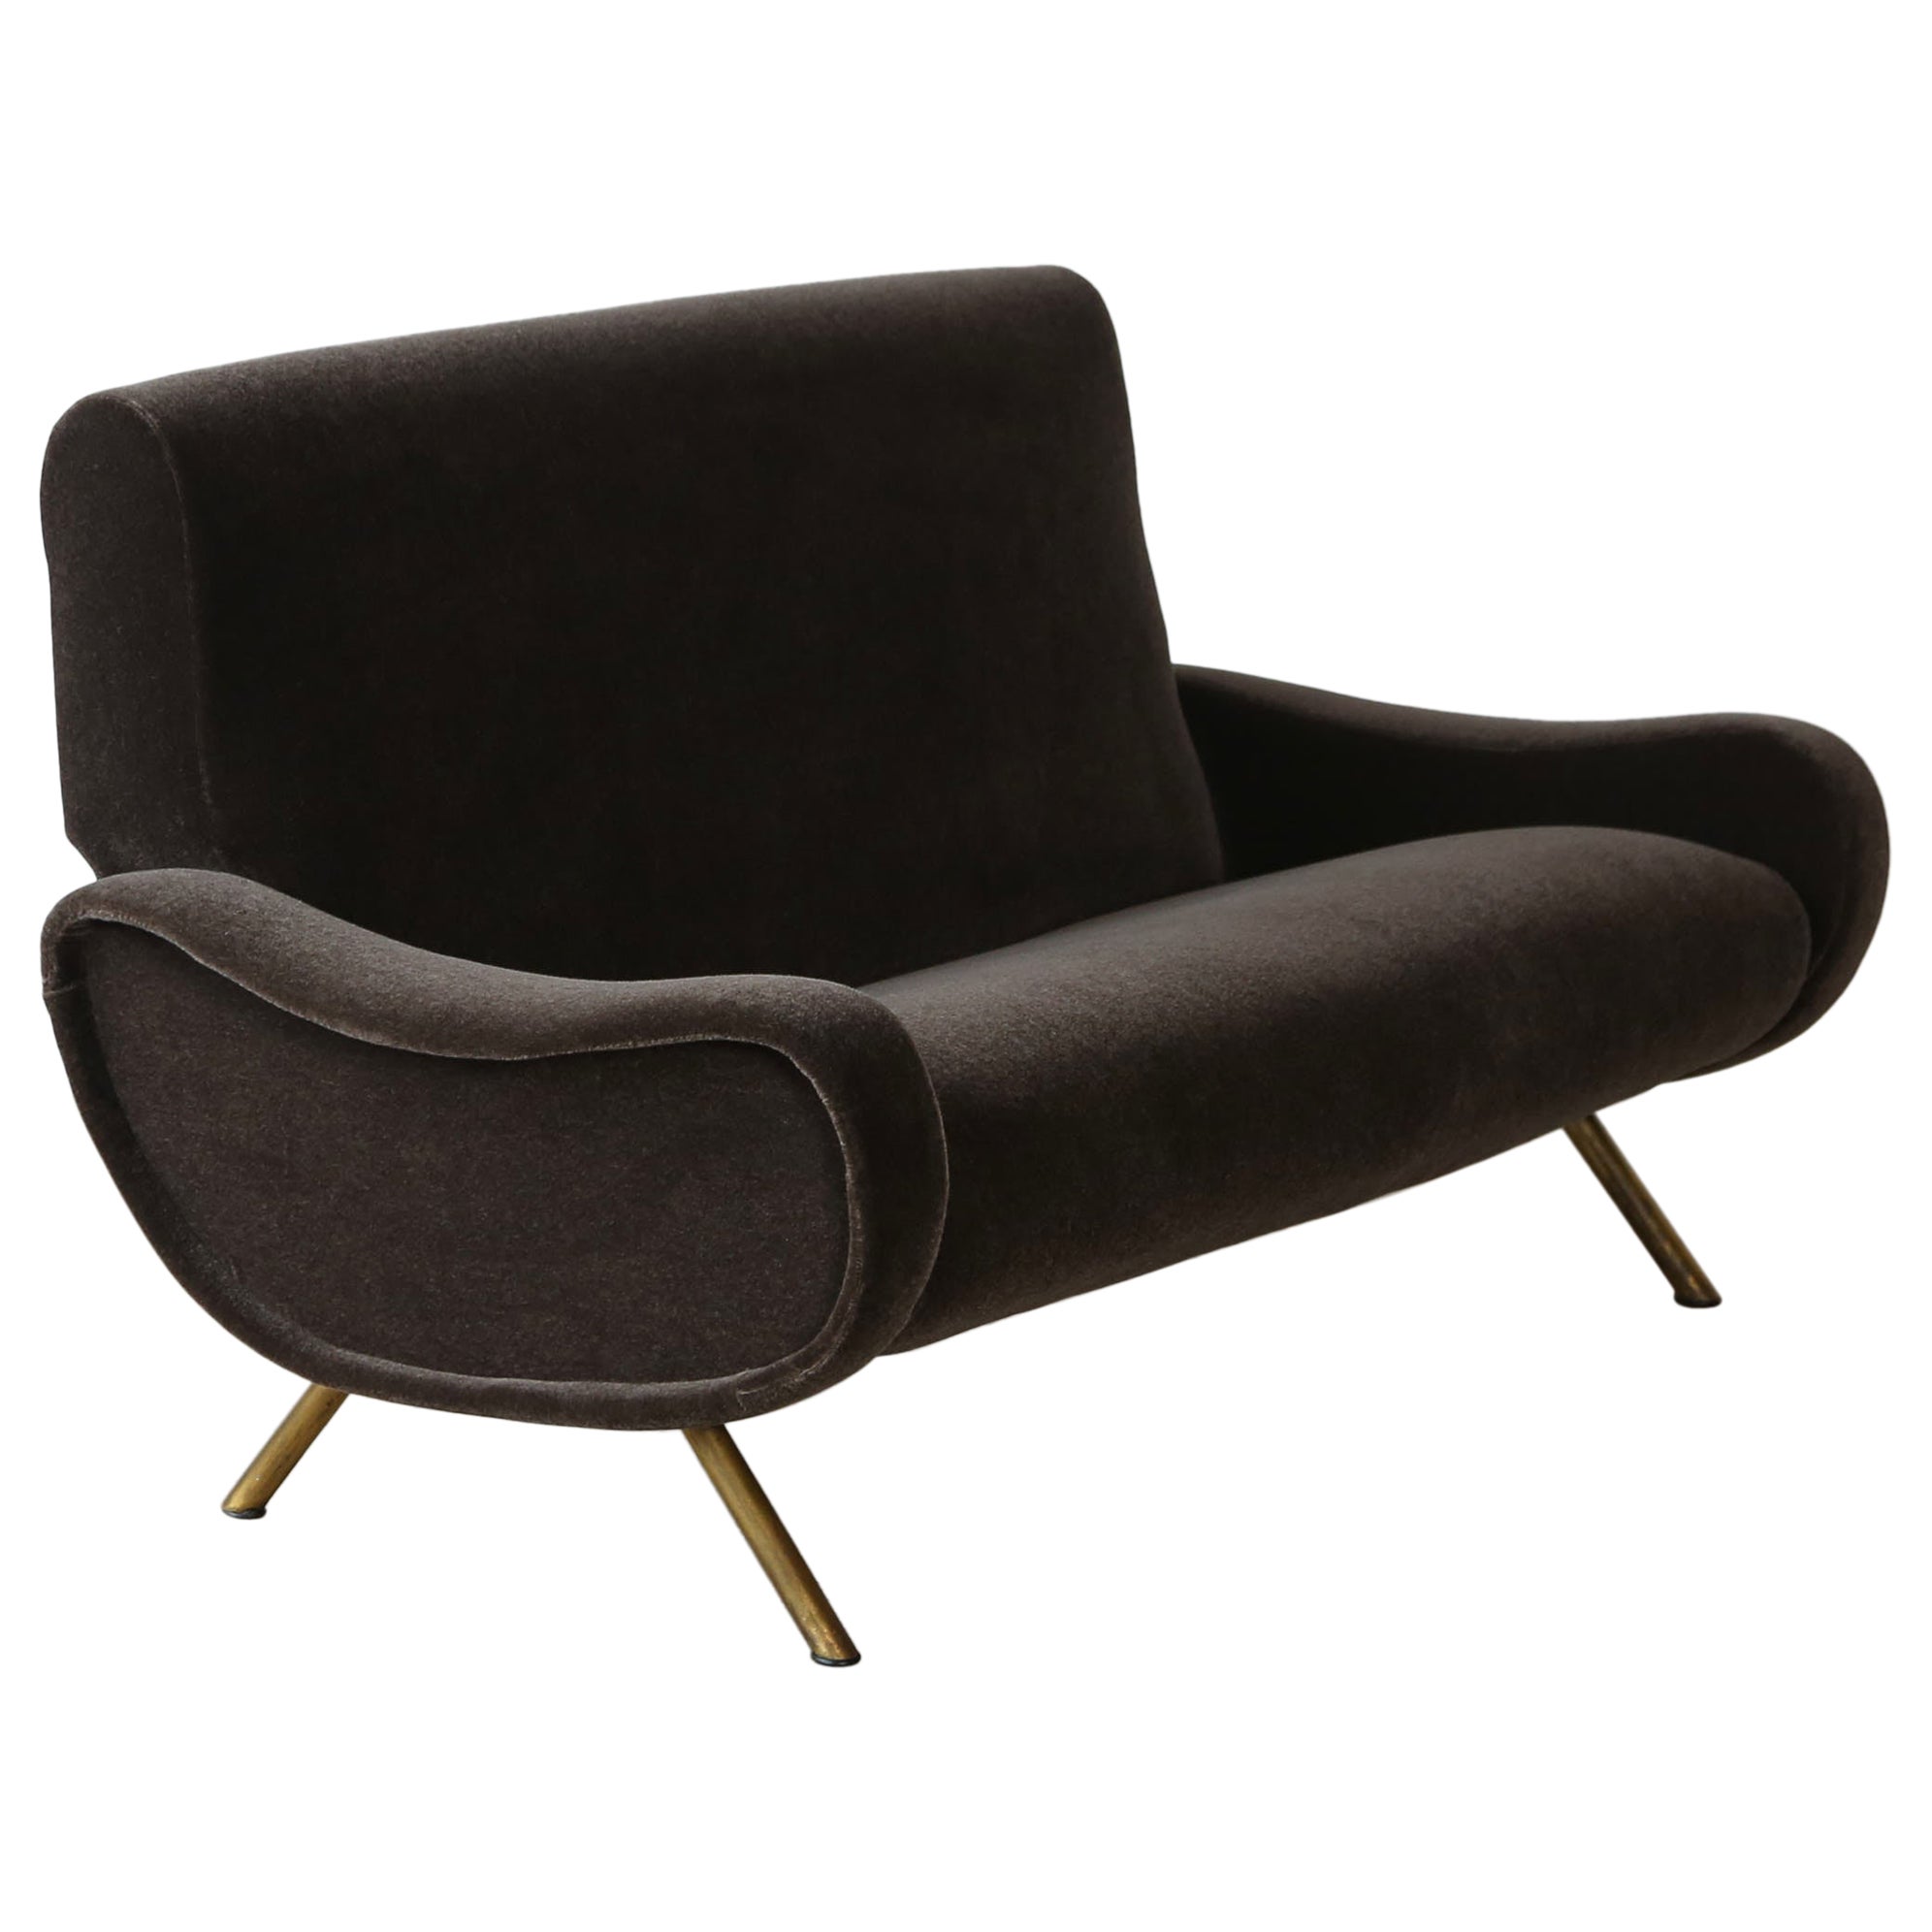 Seltenes zweisitziges Marco Zanuso Damen-Sofa, Arflex, Italien, 1960er Jahre, neu, reines Mohair